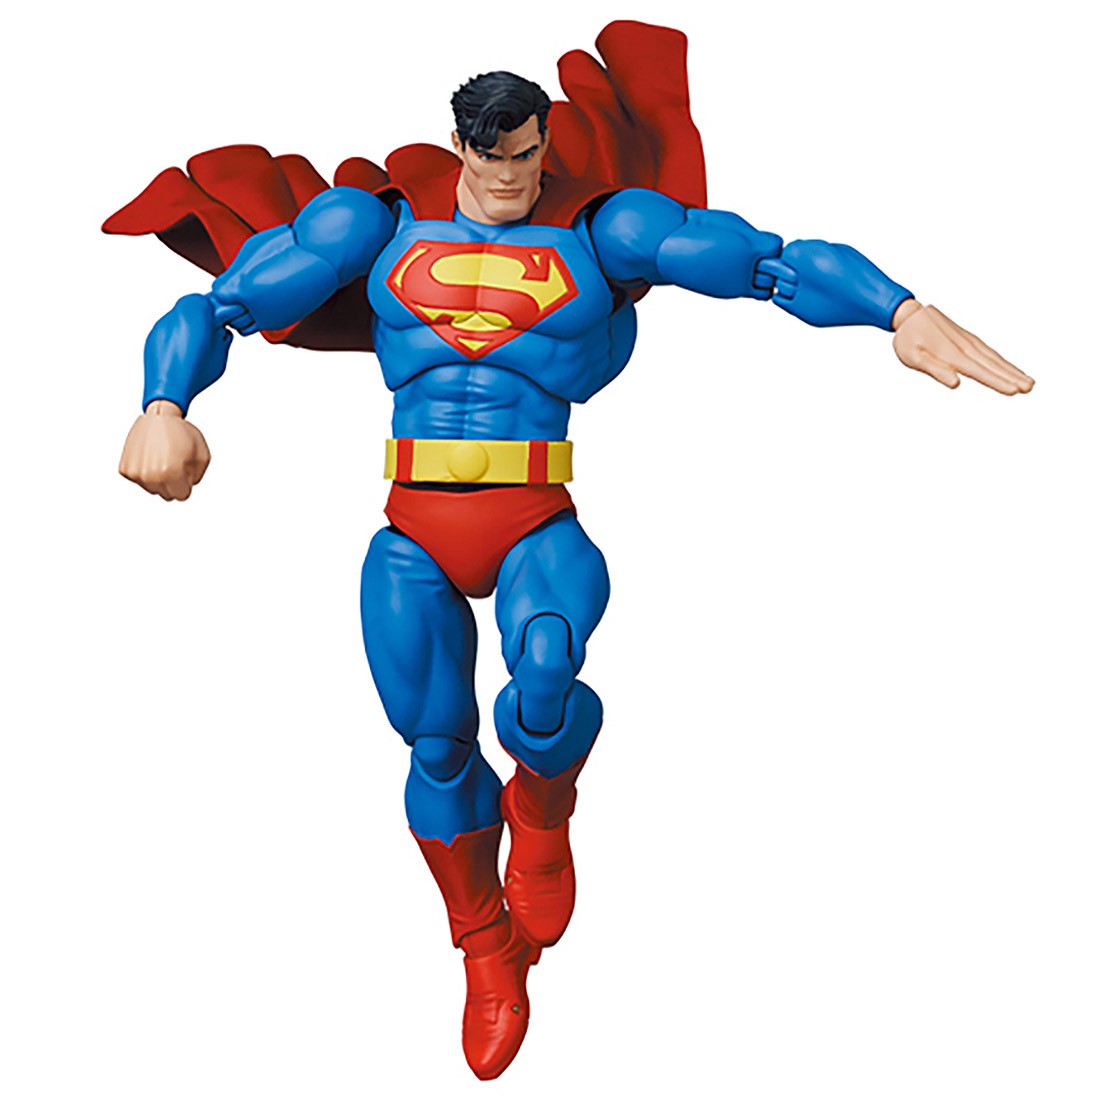 Medicom MAFEX The Dark Knight Returns Superman Figure (blue)